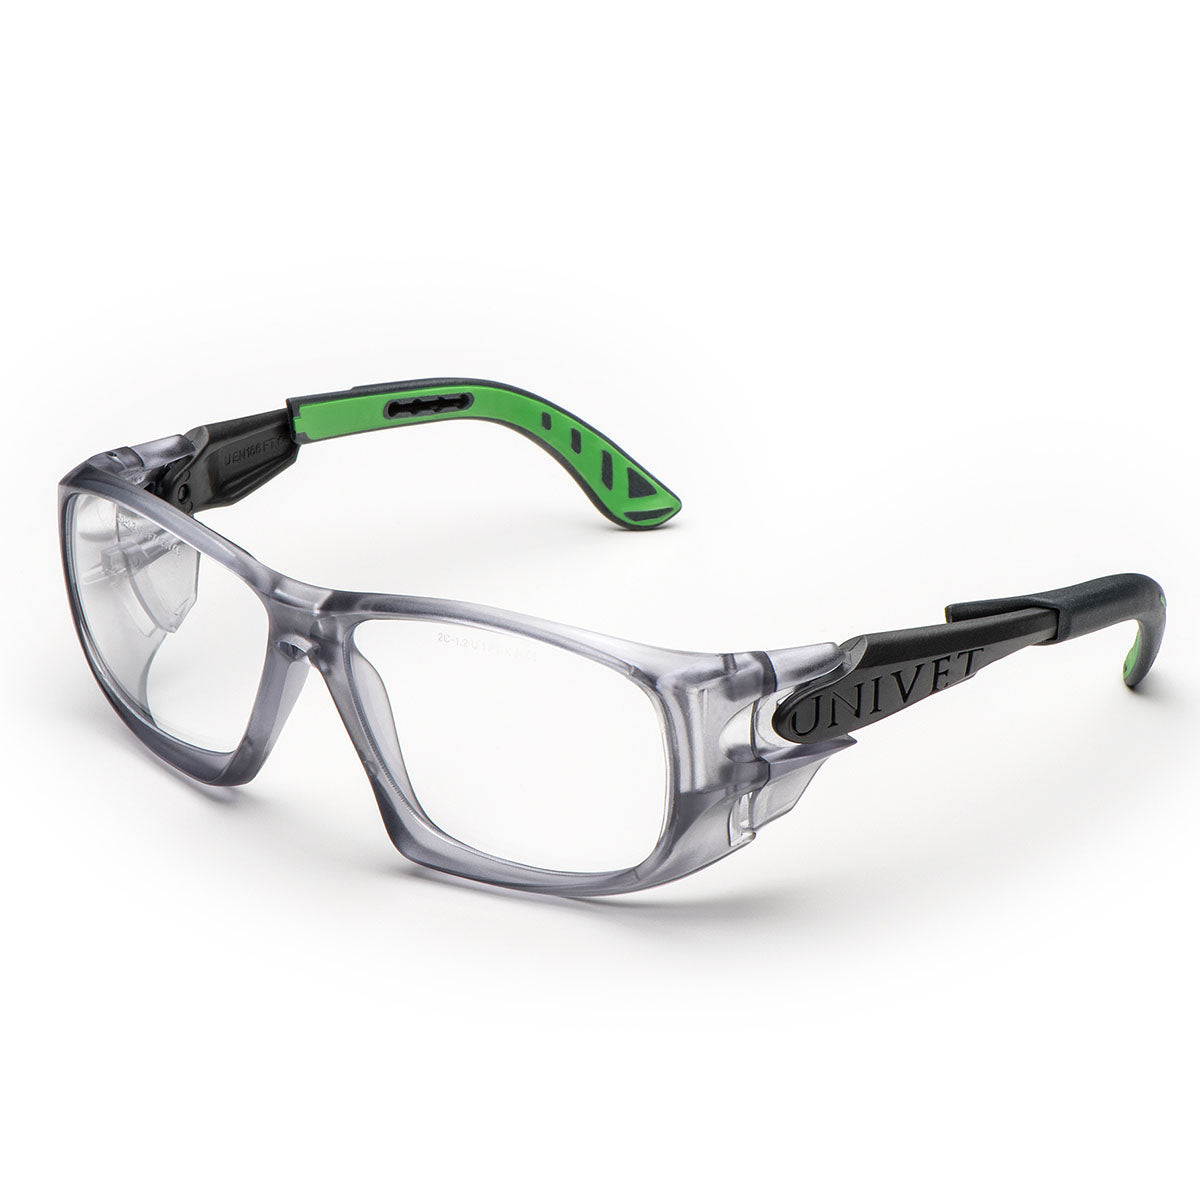 Univet 5X9.03.00.00 Clear Safety Glasses 